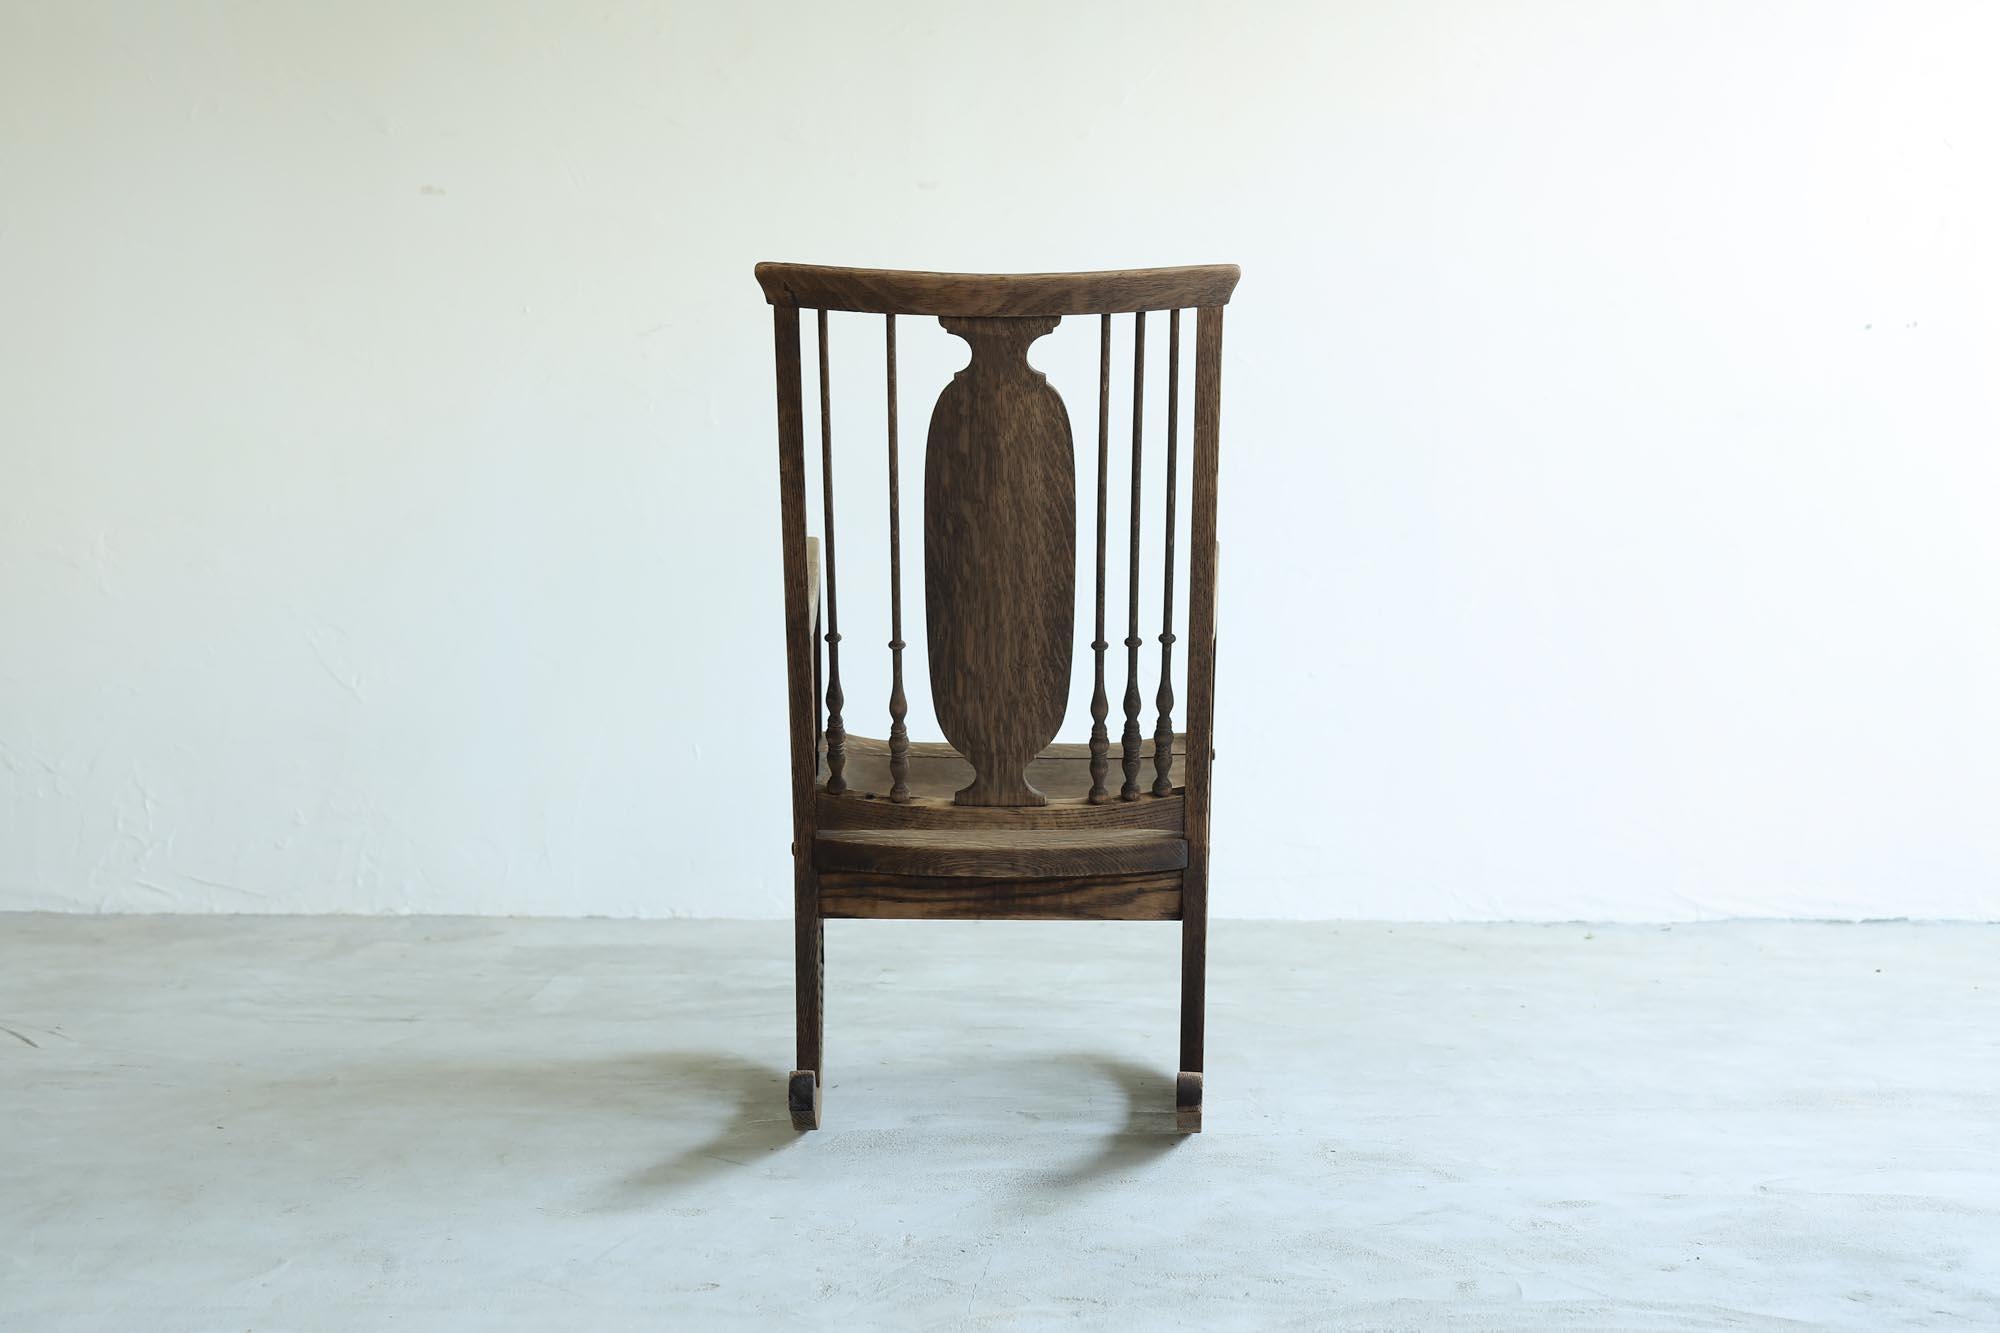 Japanese Antique Rocking Chair, Primitive Japanese Wooden Cahair, Wabi-Sabi 4